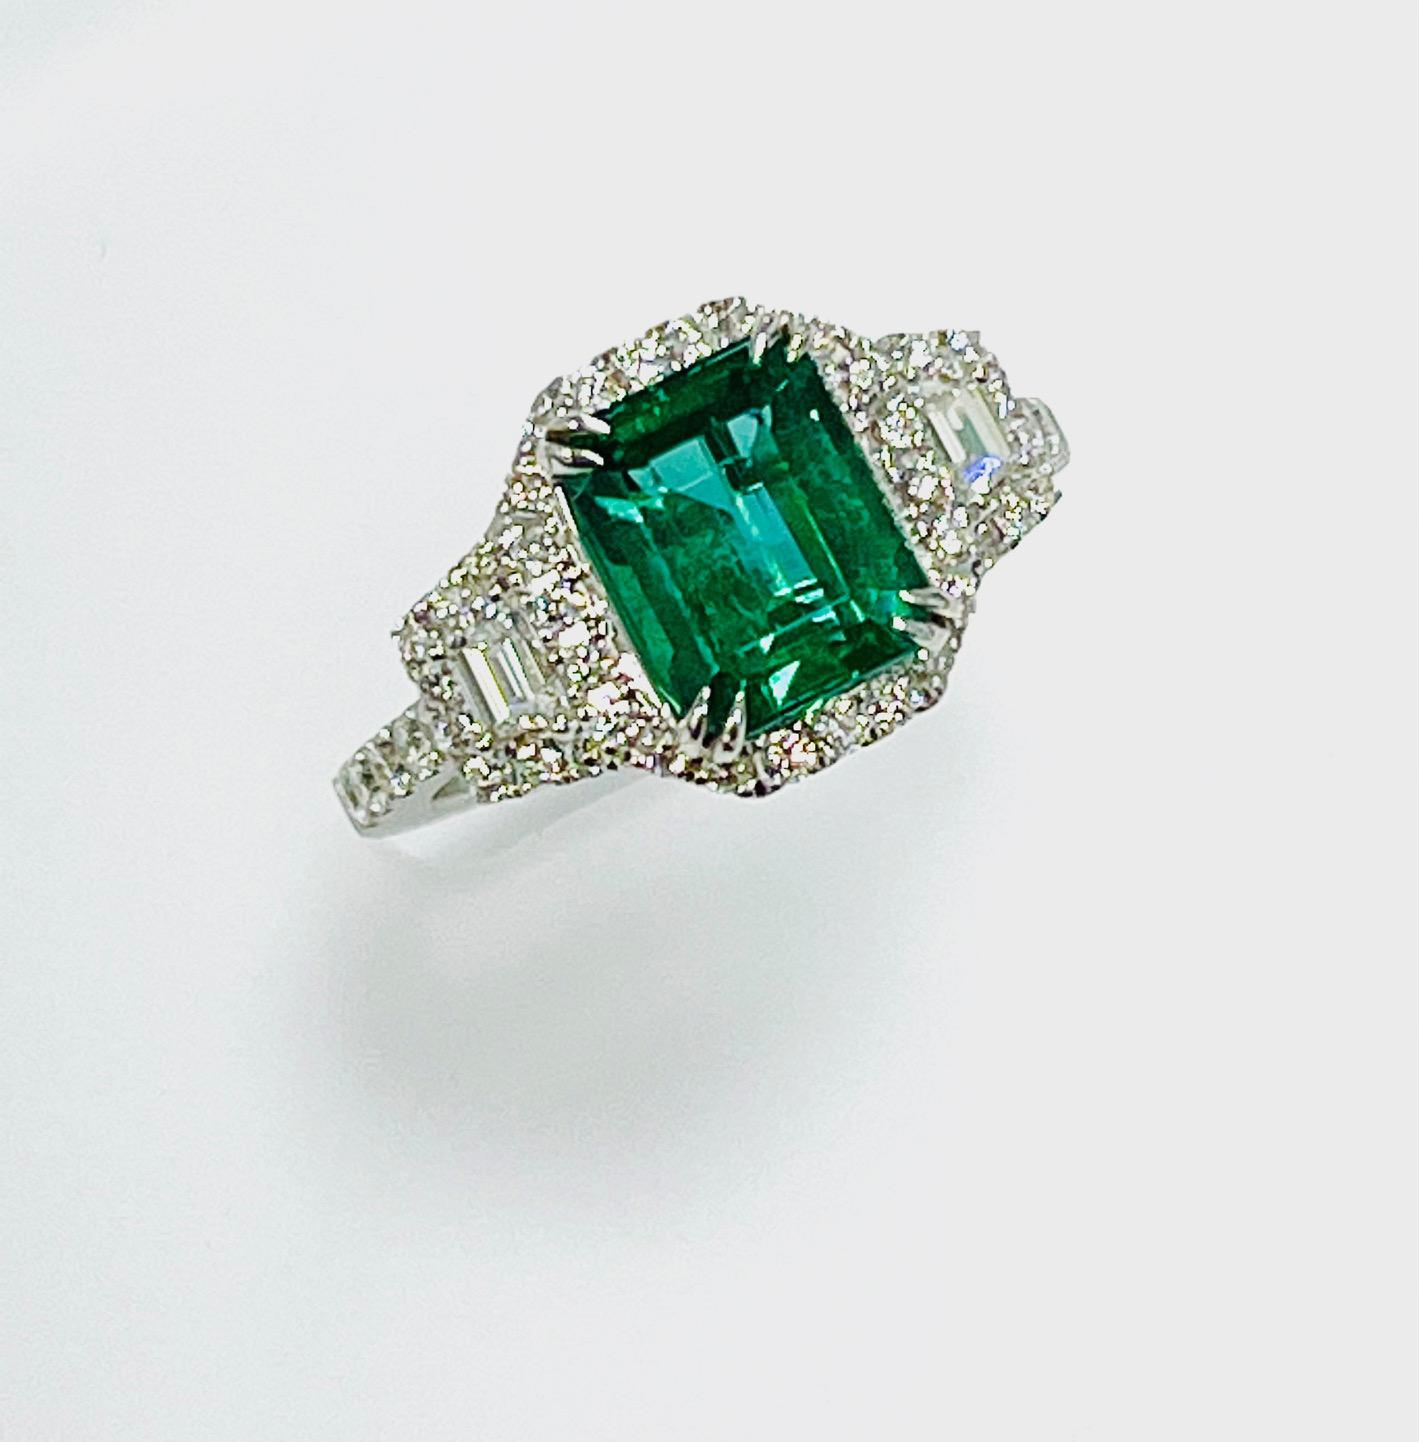 Emerald Cut 2.16 Carat Zambian Emerald Diamond Cocktail Ring For Sale